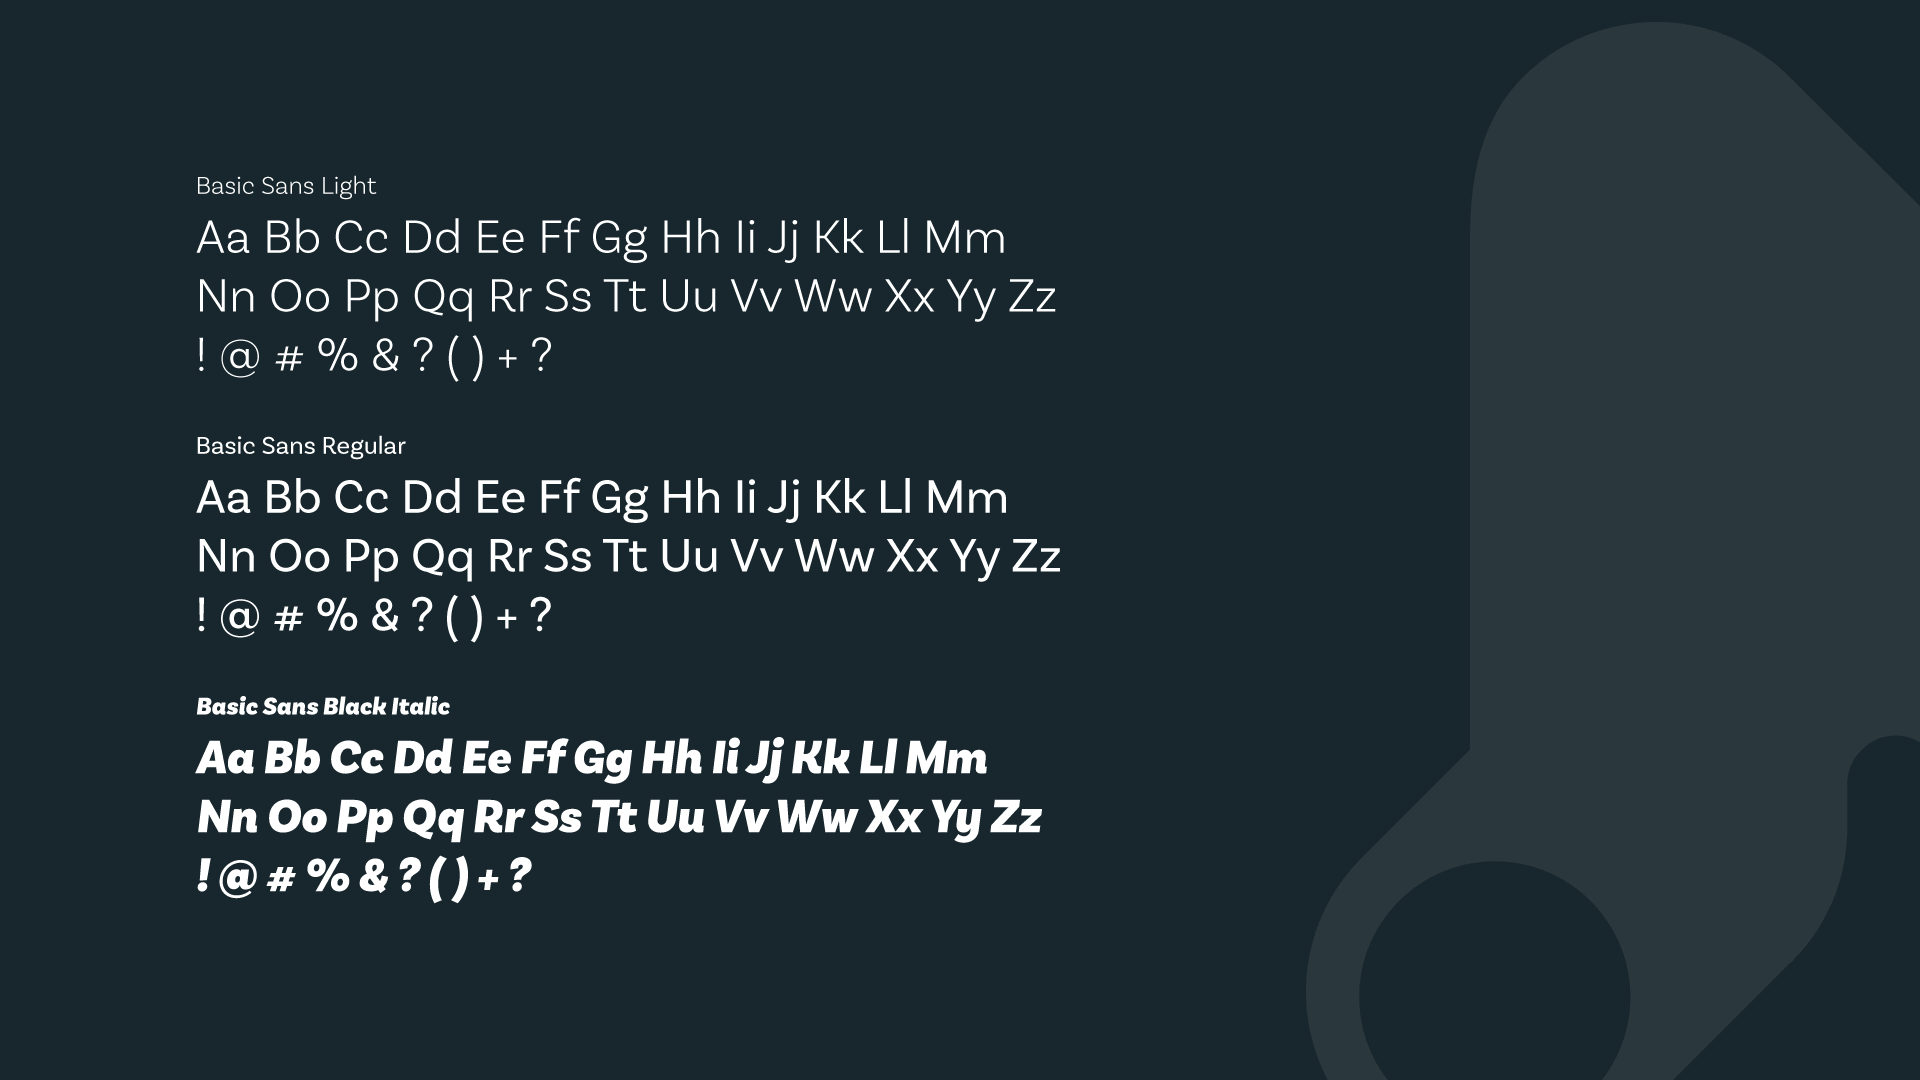 fonts used for leading MRP software, basic sans